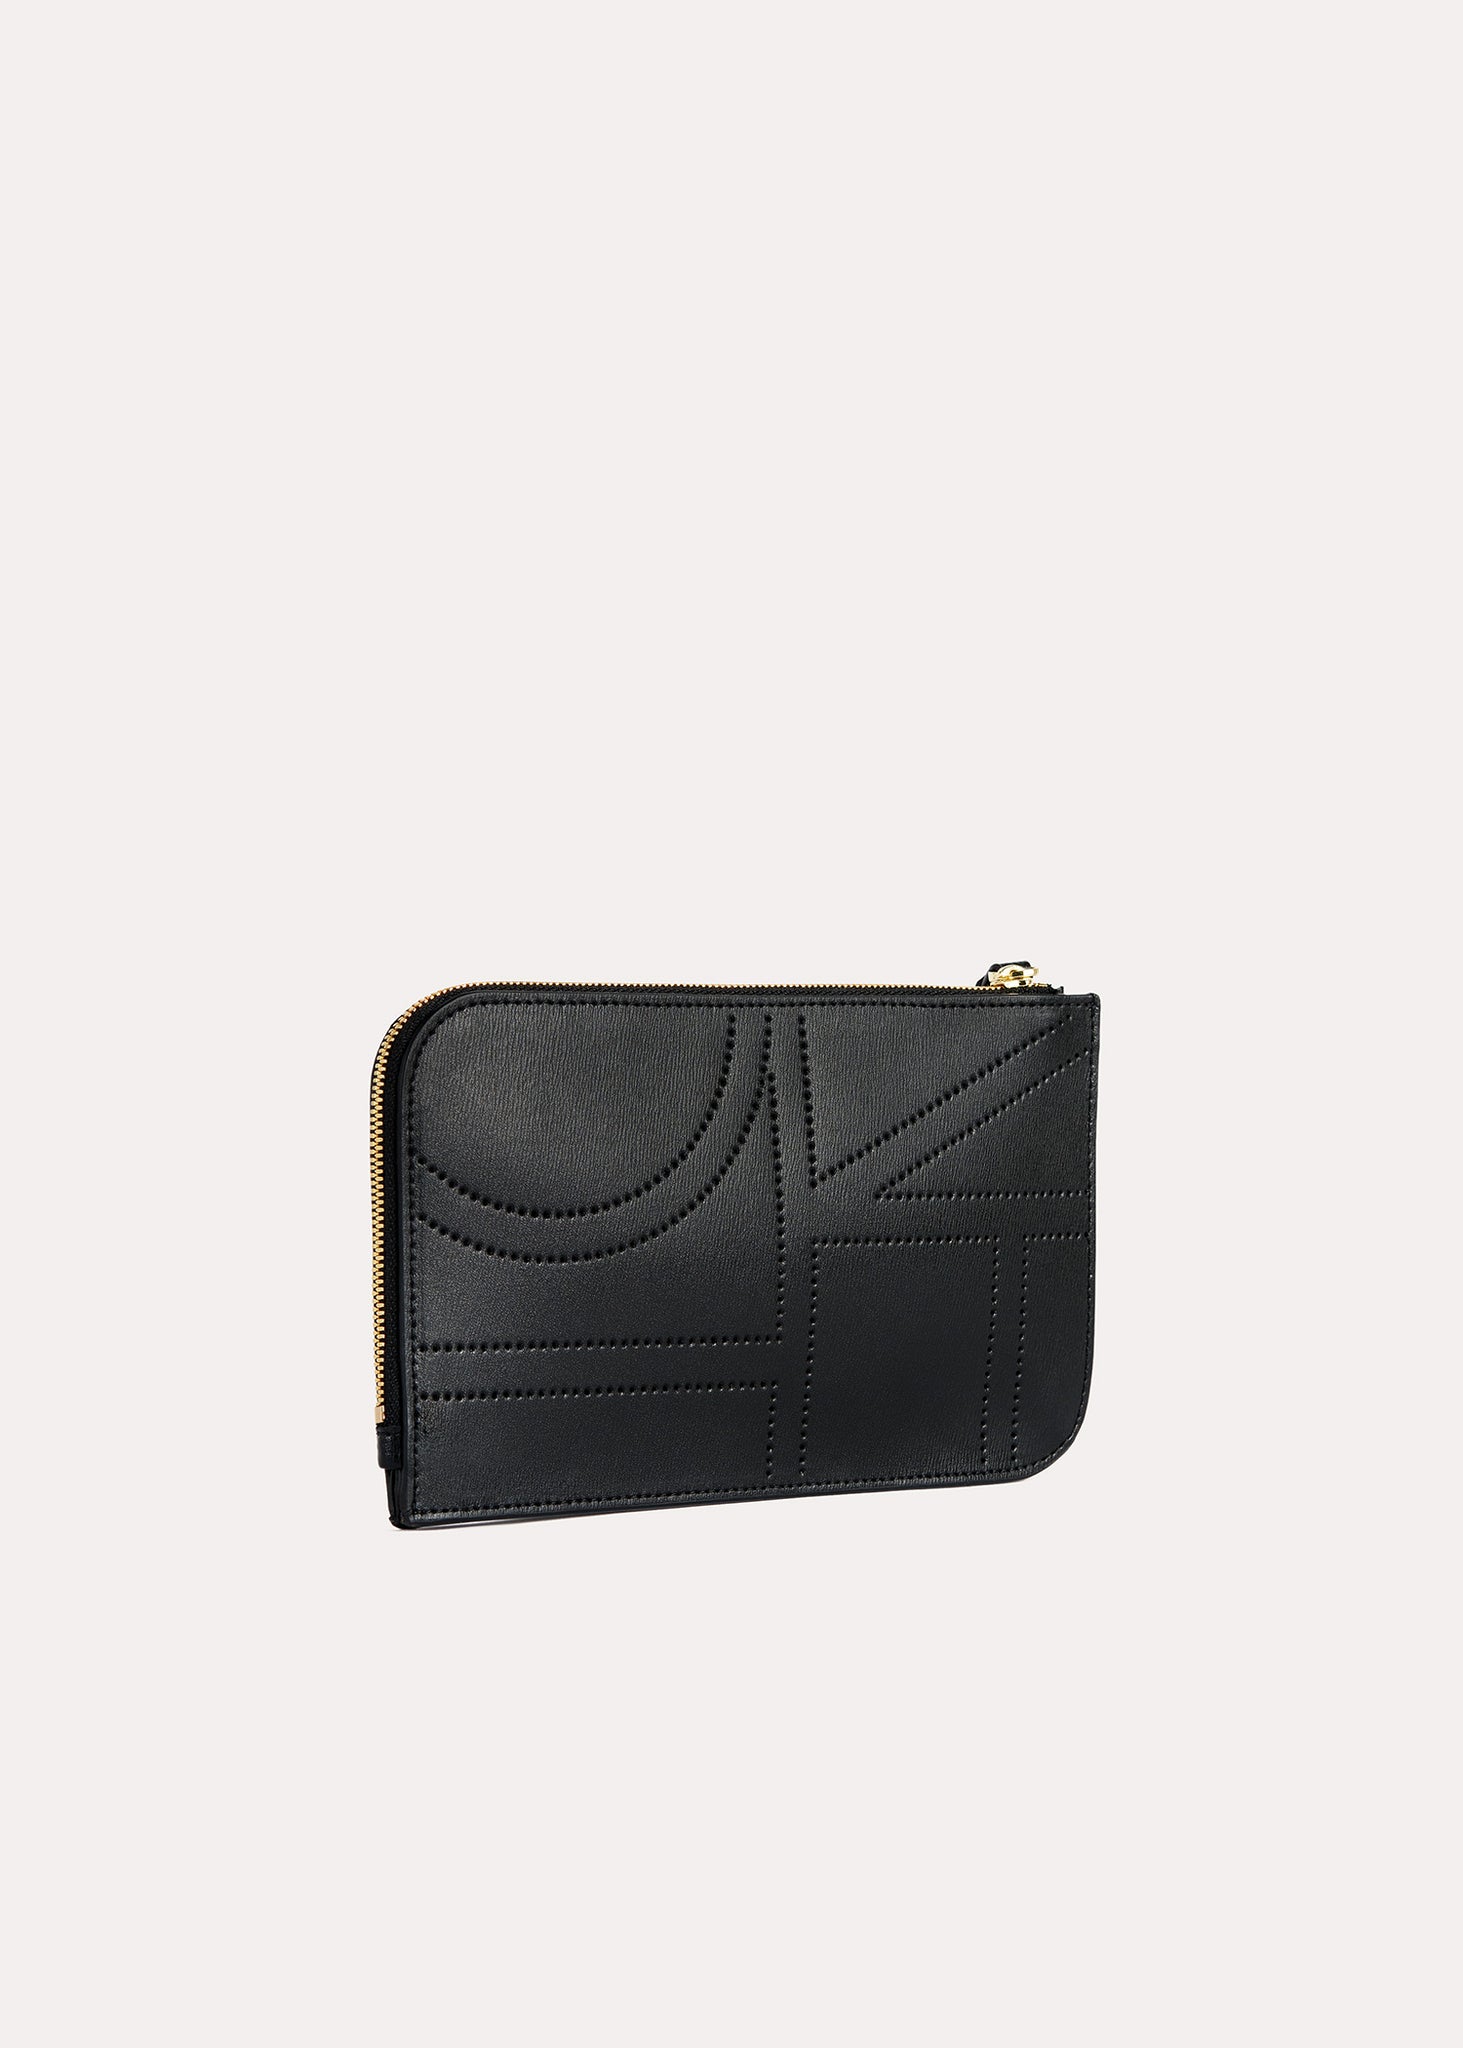 Monogram leather wristlet pouch black